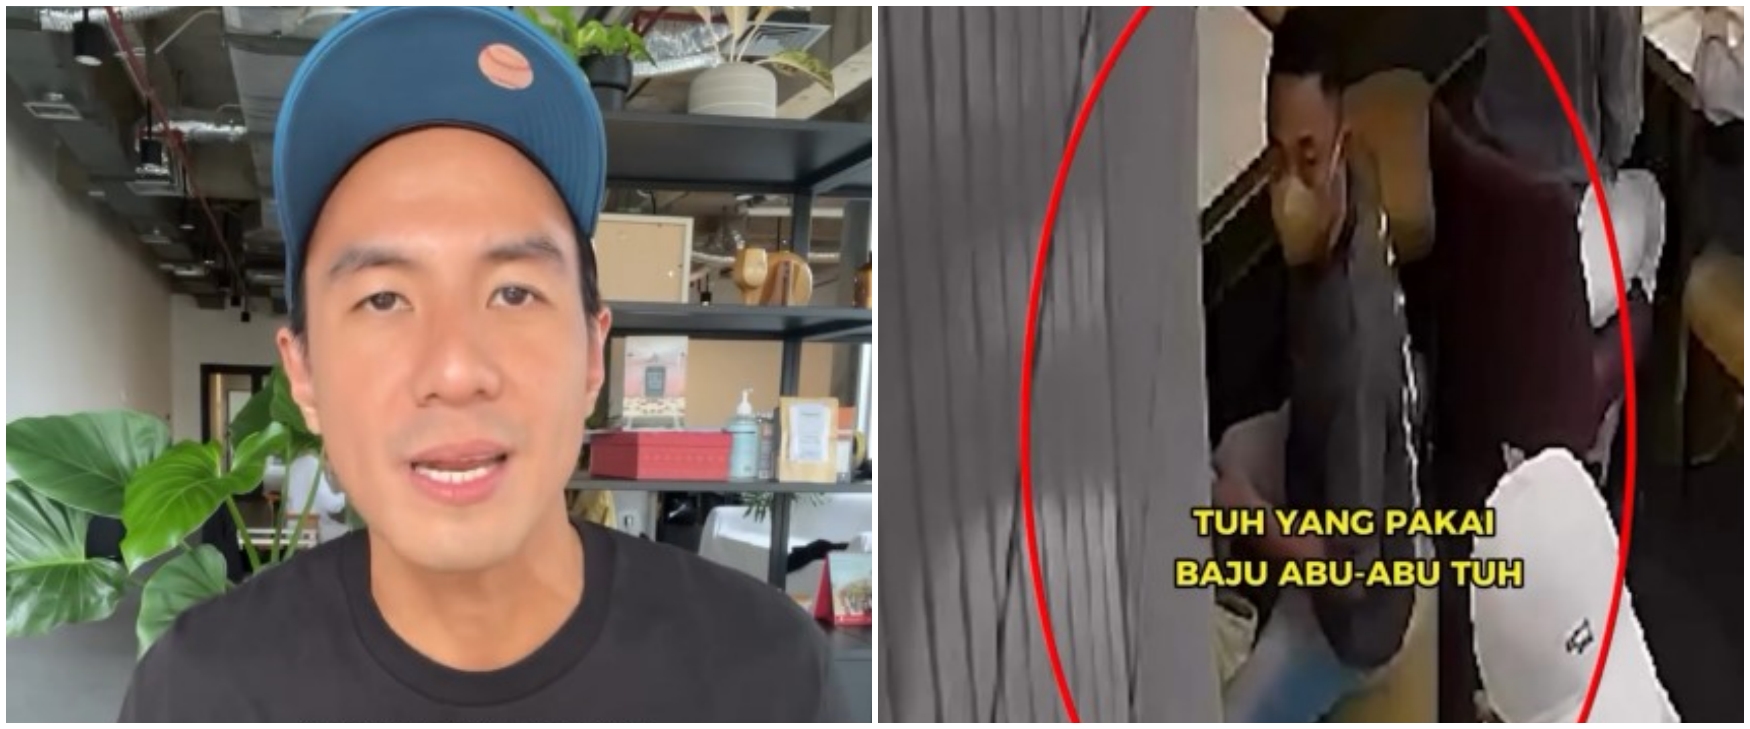 Daniel Mananta bagikan kronologi istrinya kecopetan di mal, sikap legowonya bikin salut netizen